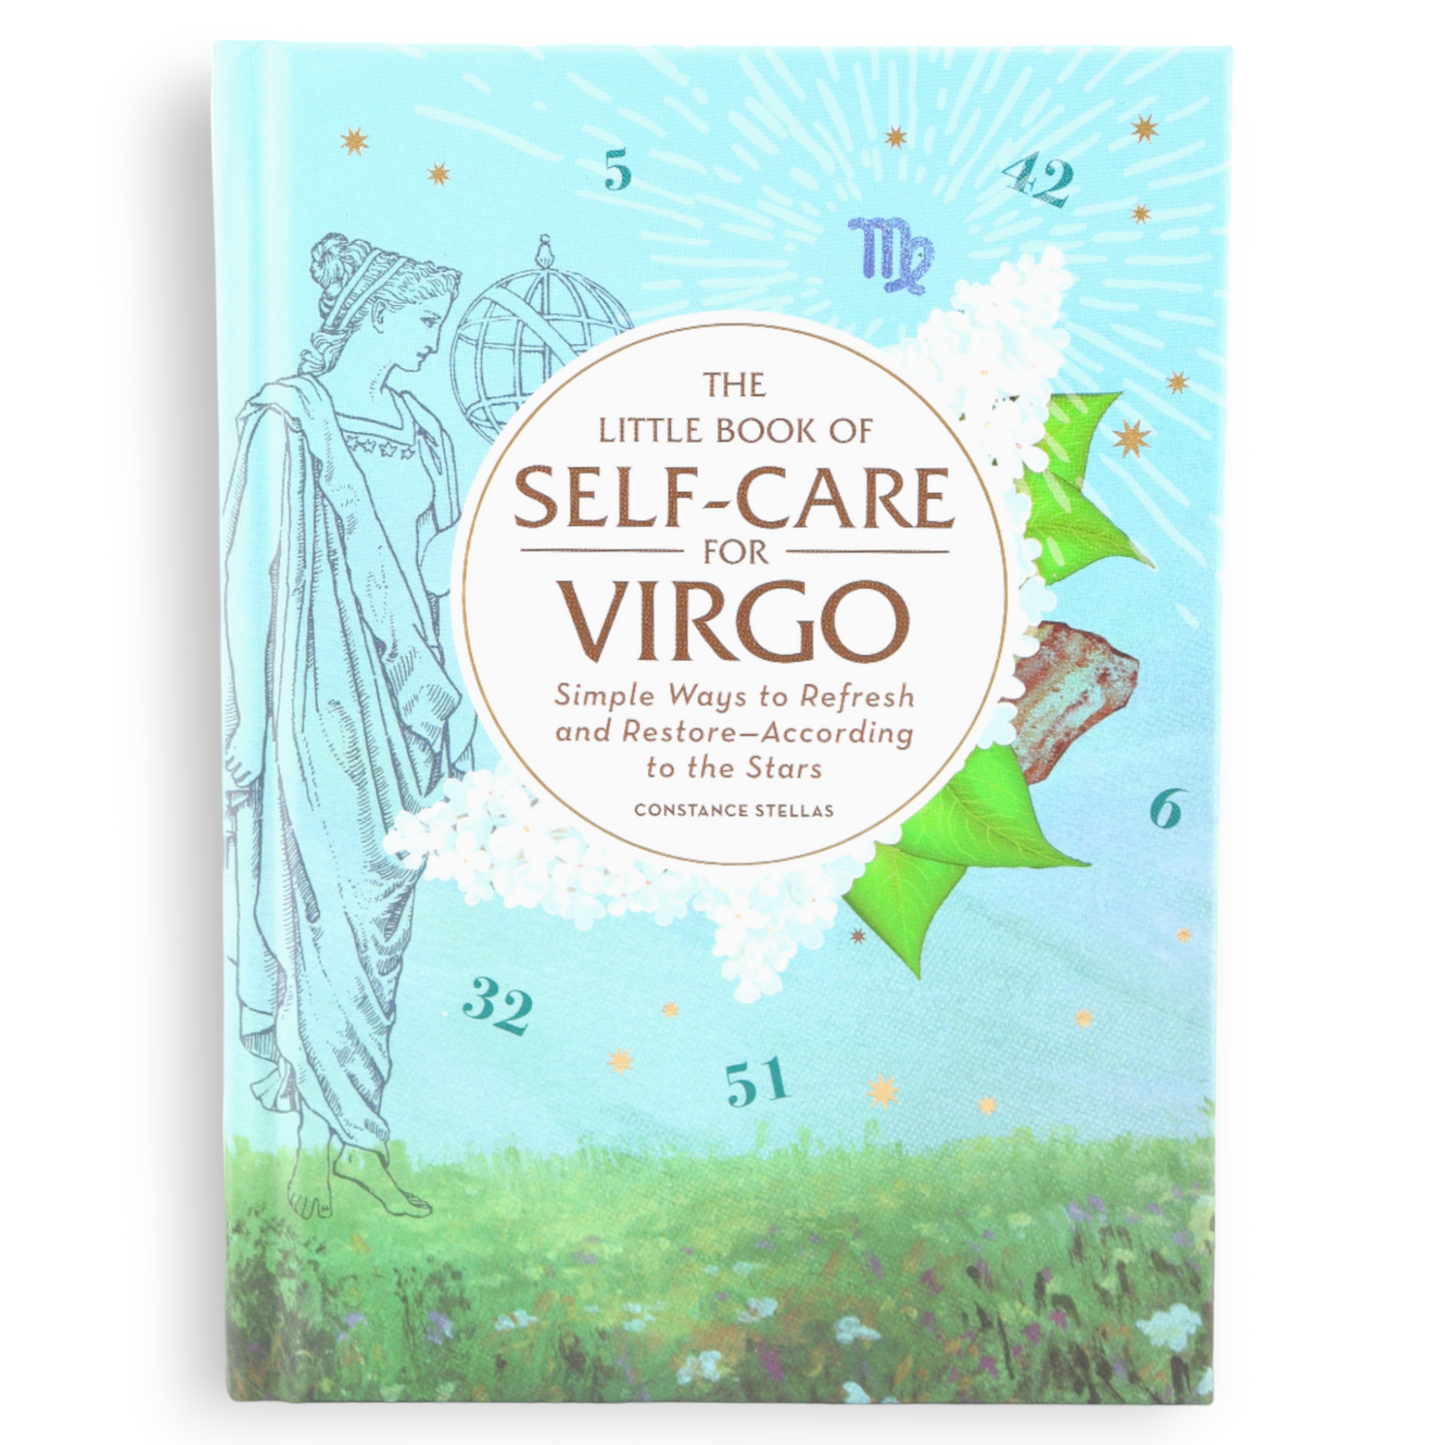 Self-care for Virgo